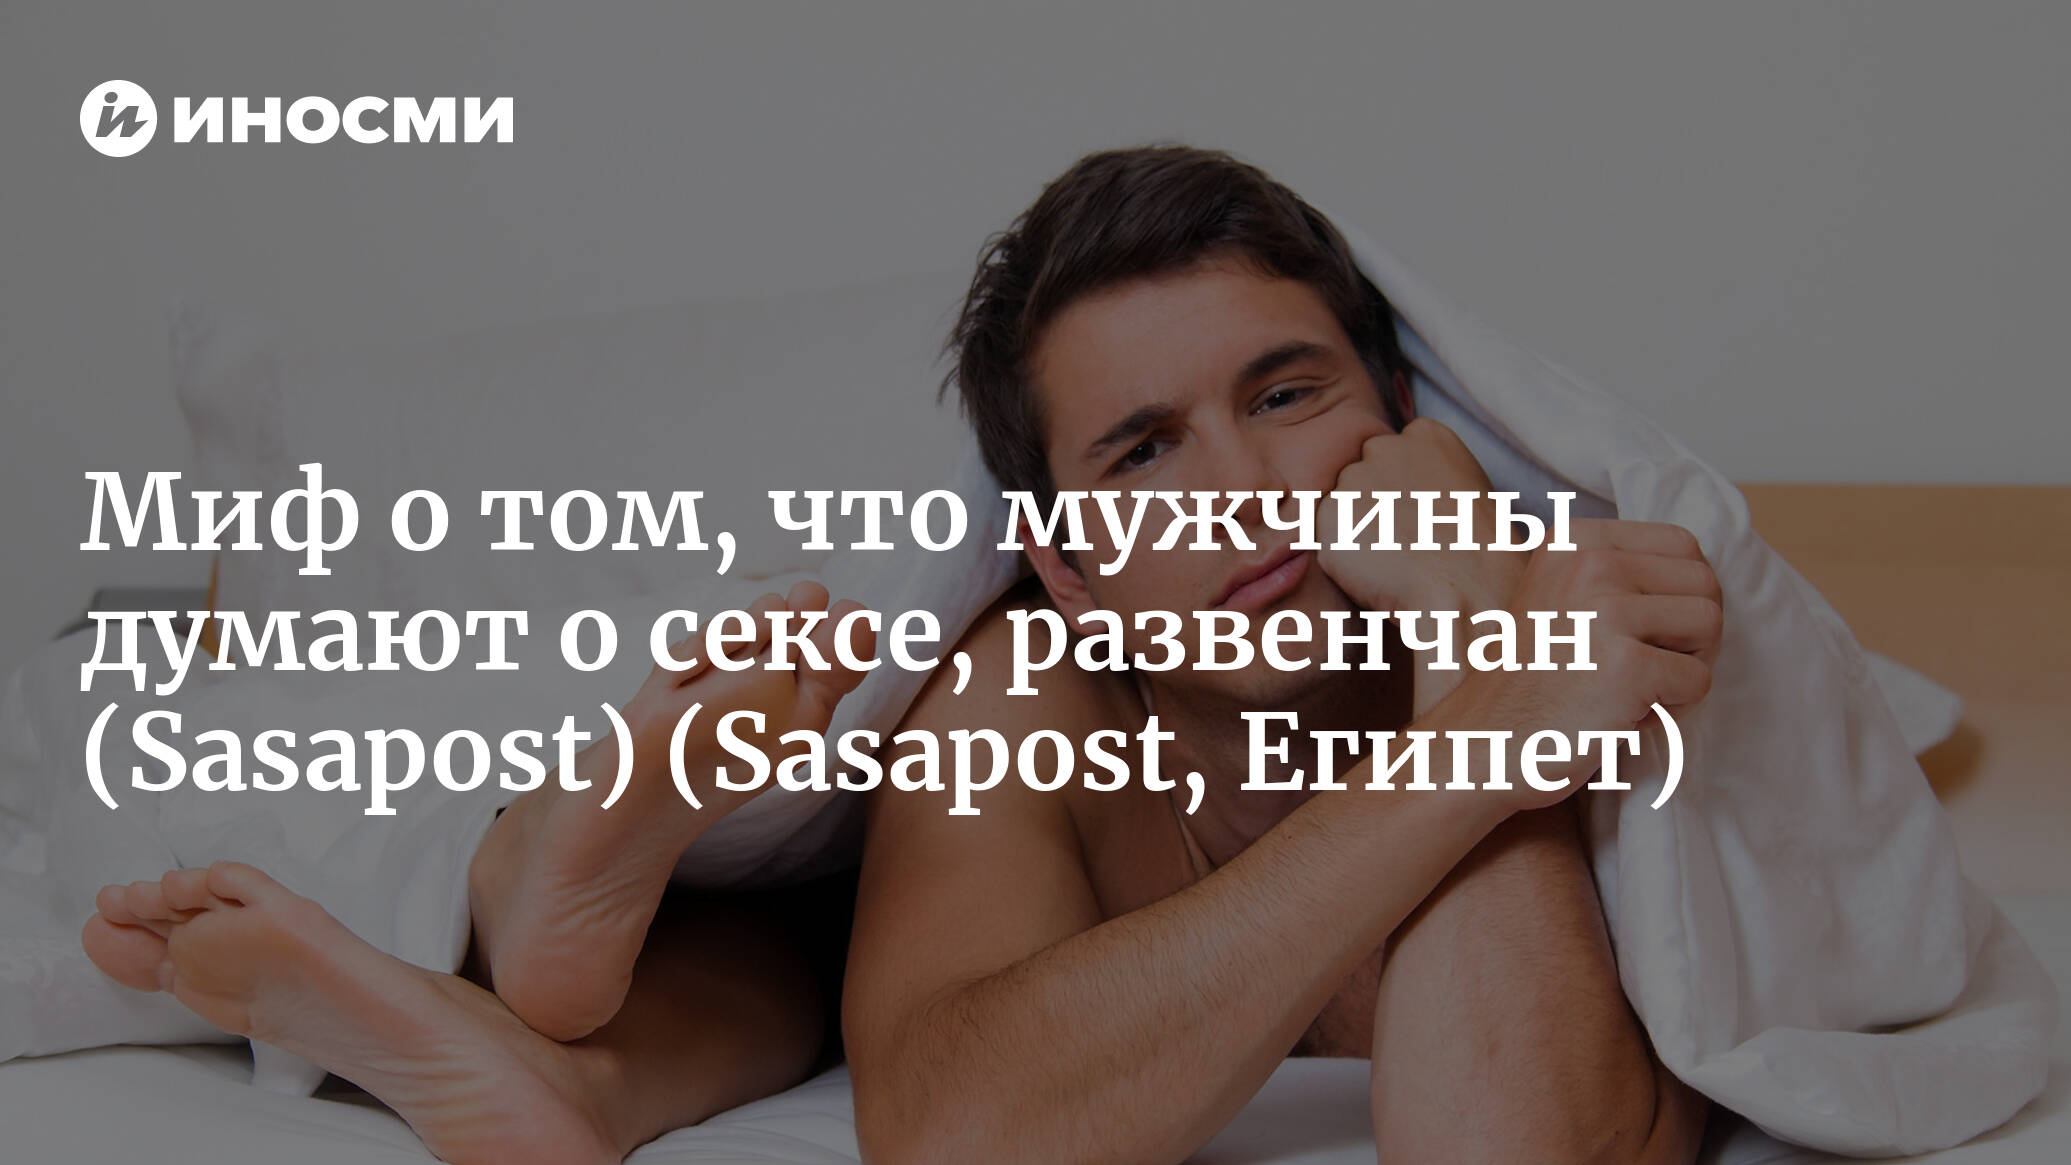 Мужчины, как часто вы думаете о сексе? - 30 ответов на форуме riosalon.ru ()